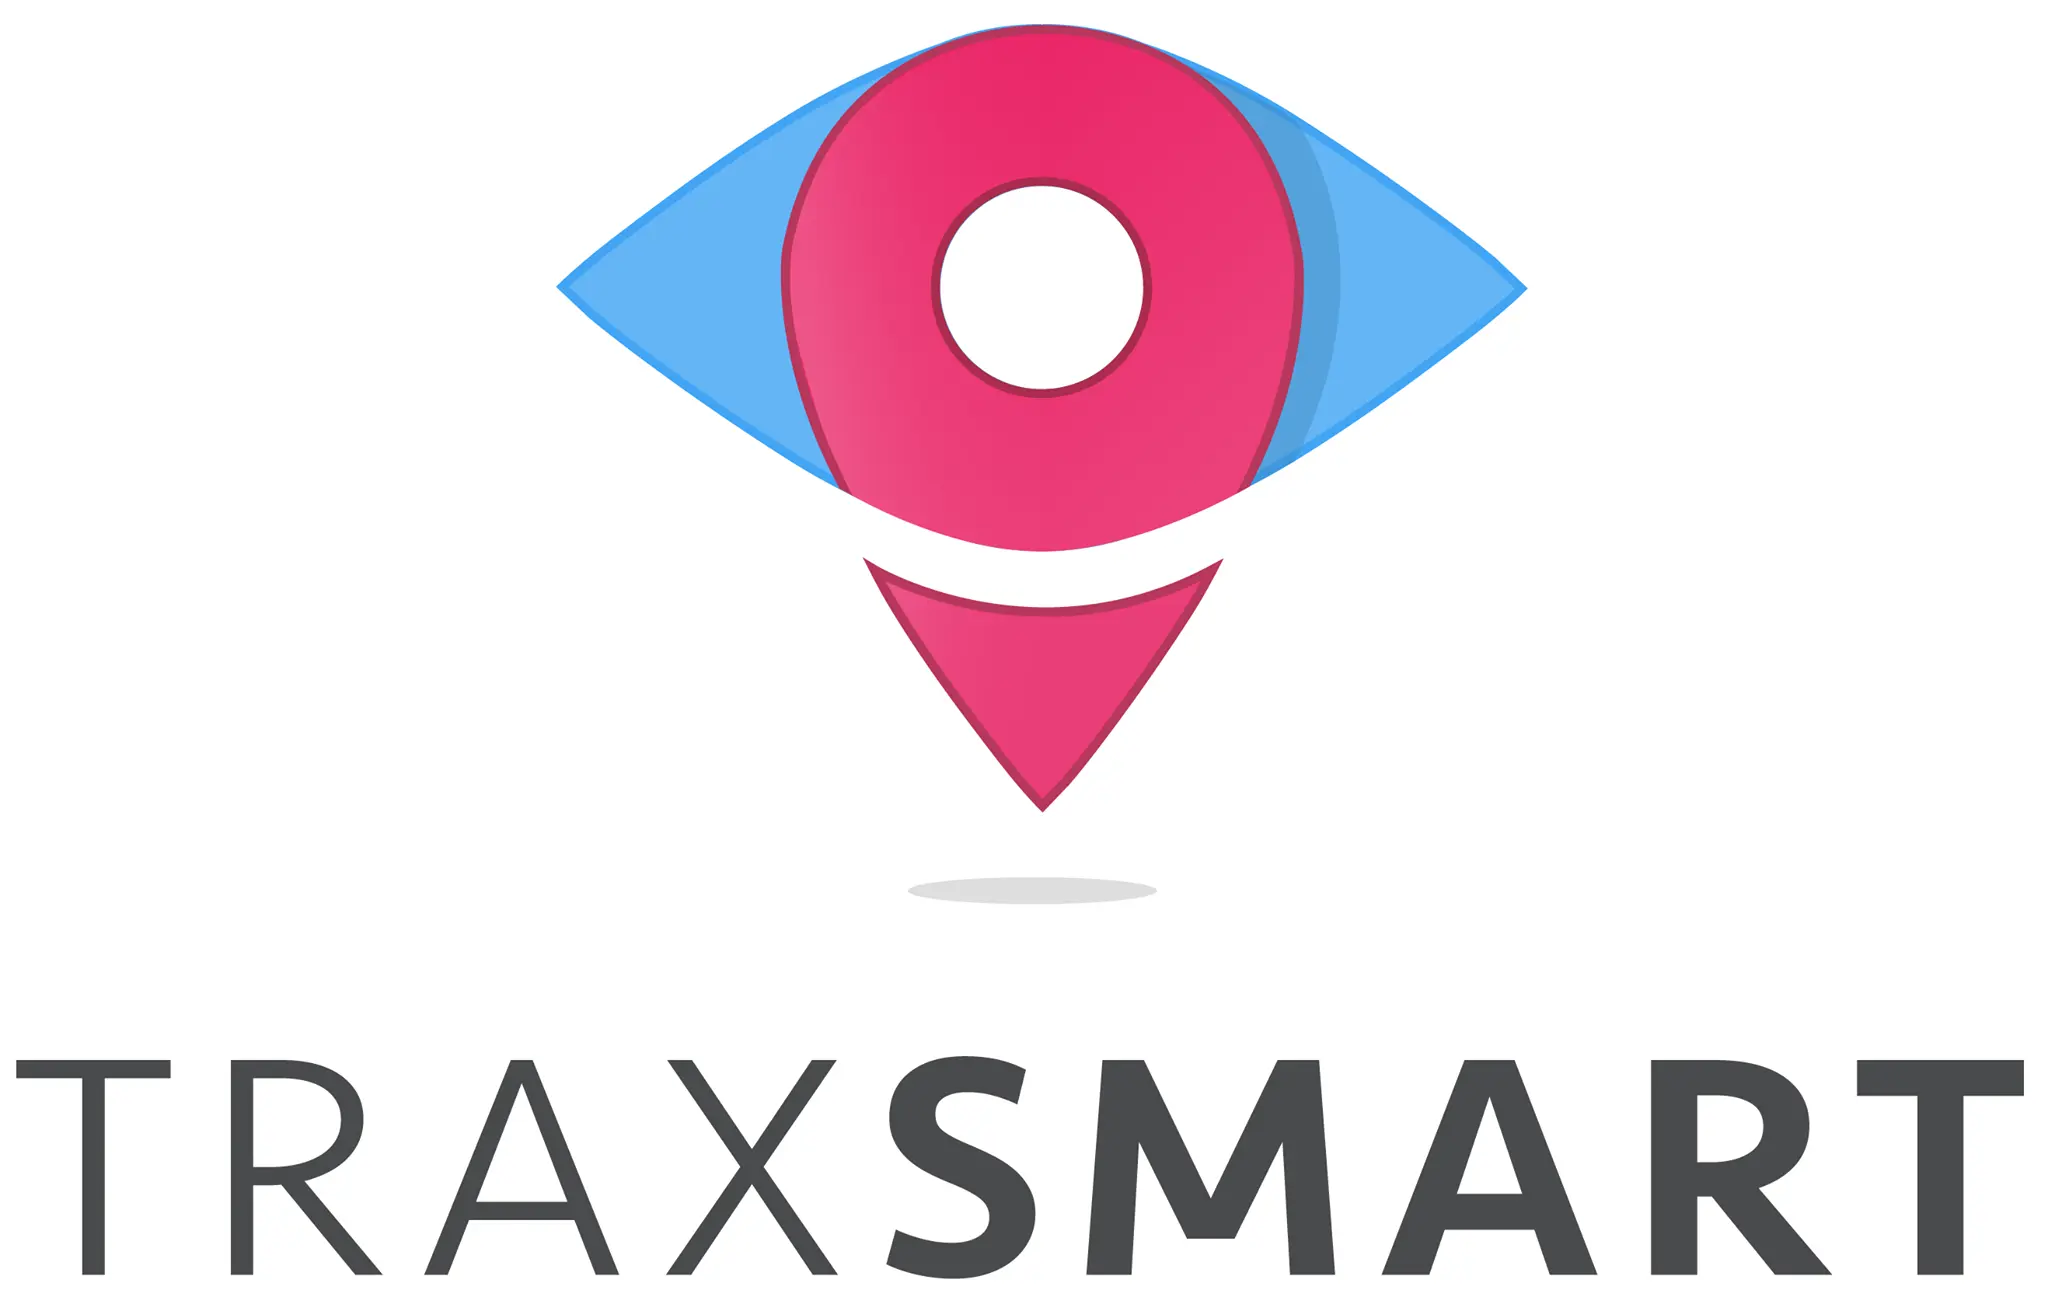 Traxsmart logo